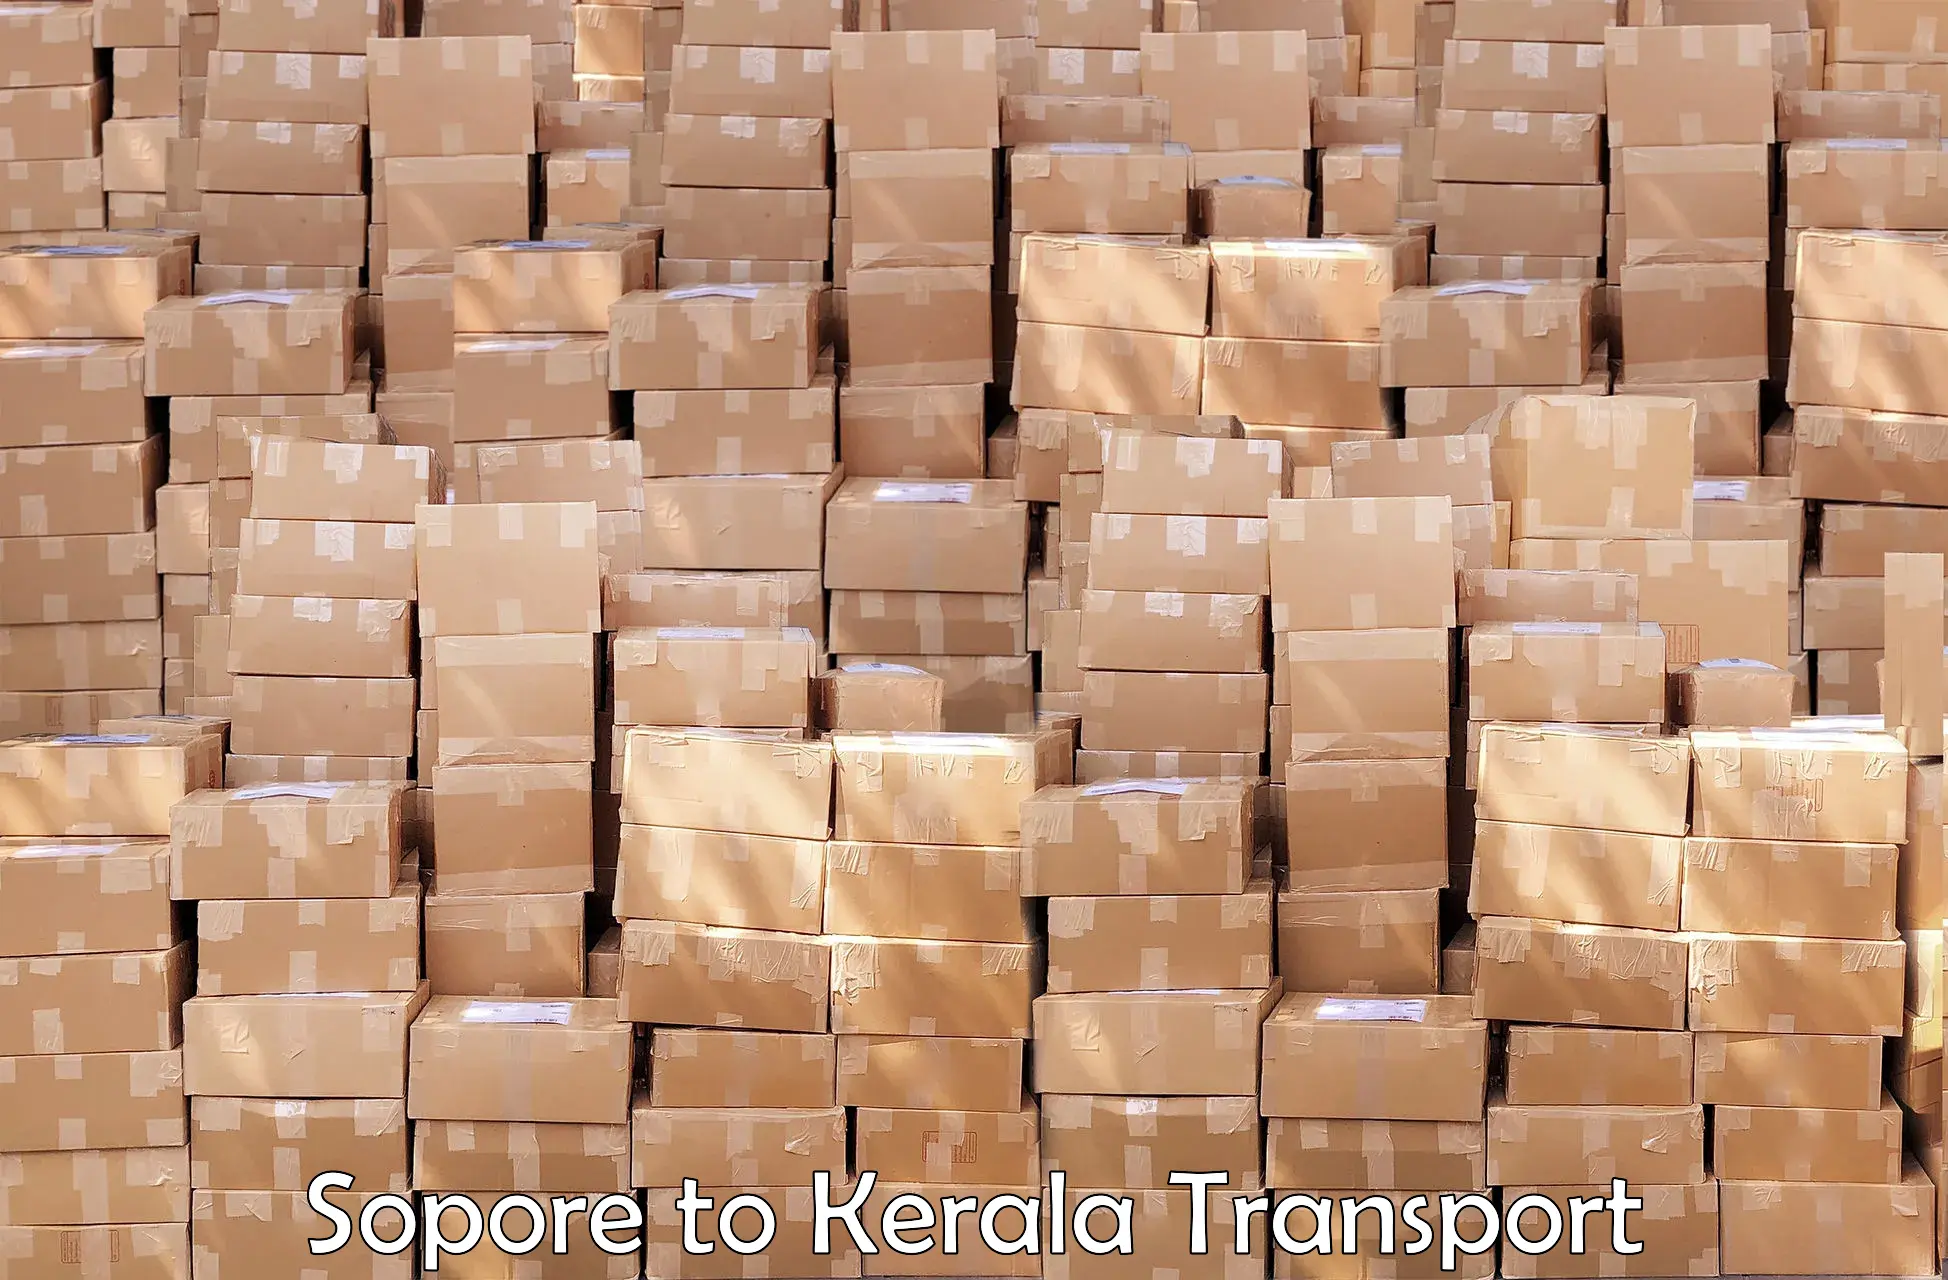 Truck transport companies in India Sopore to Kondotty